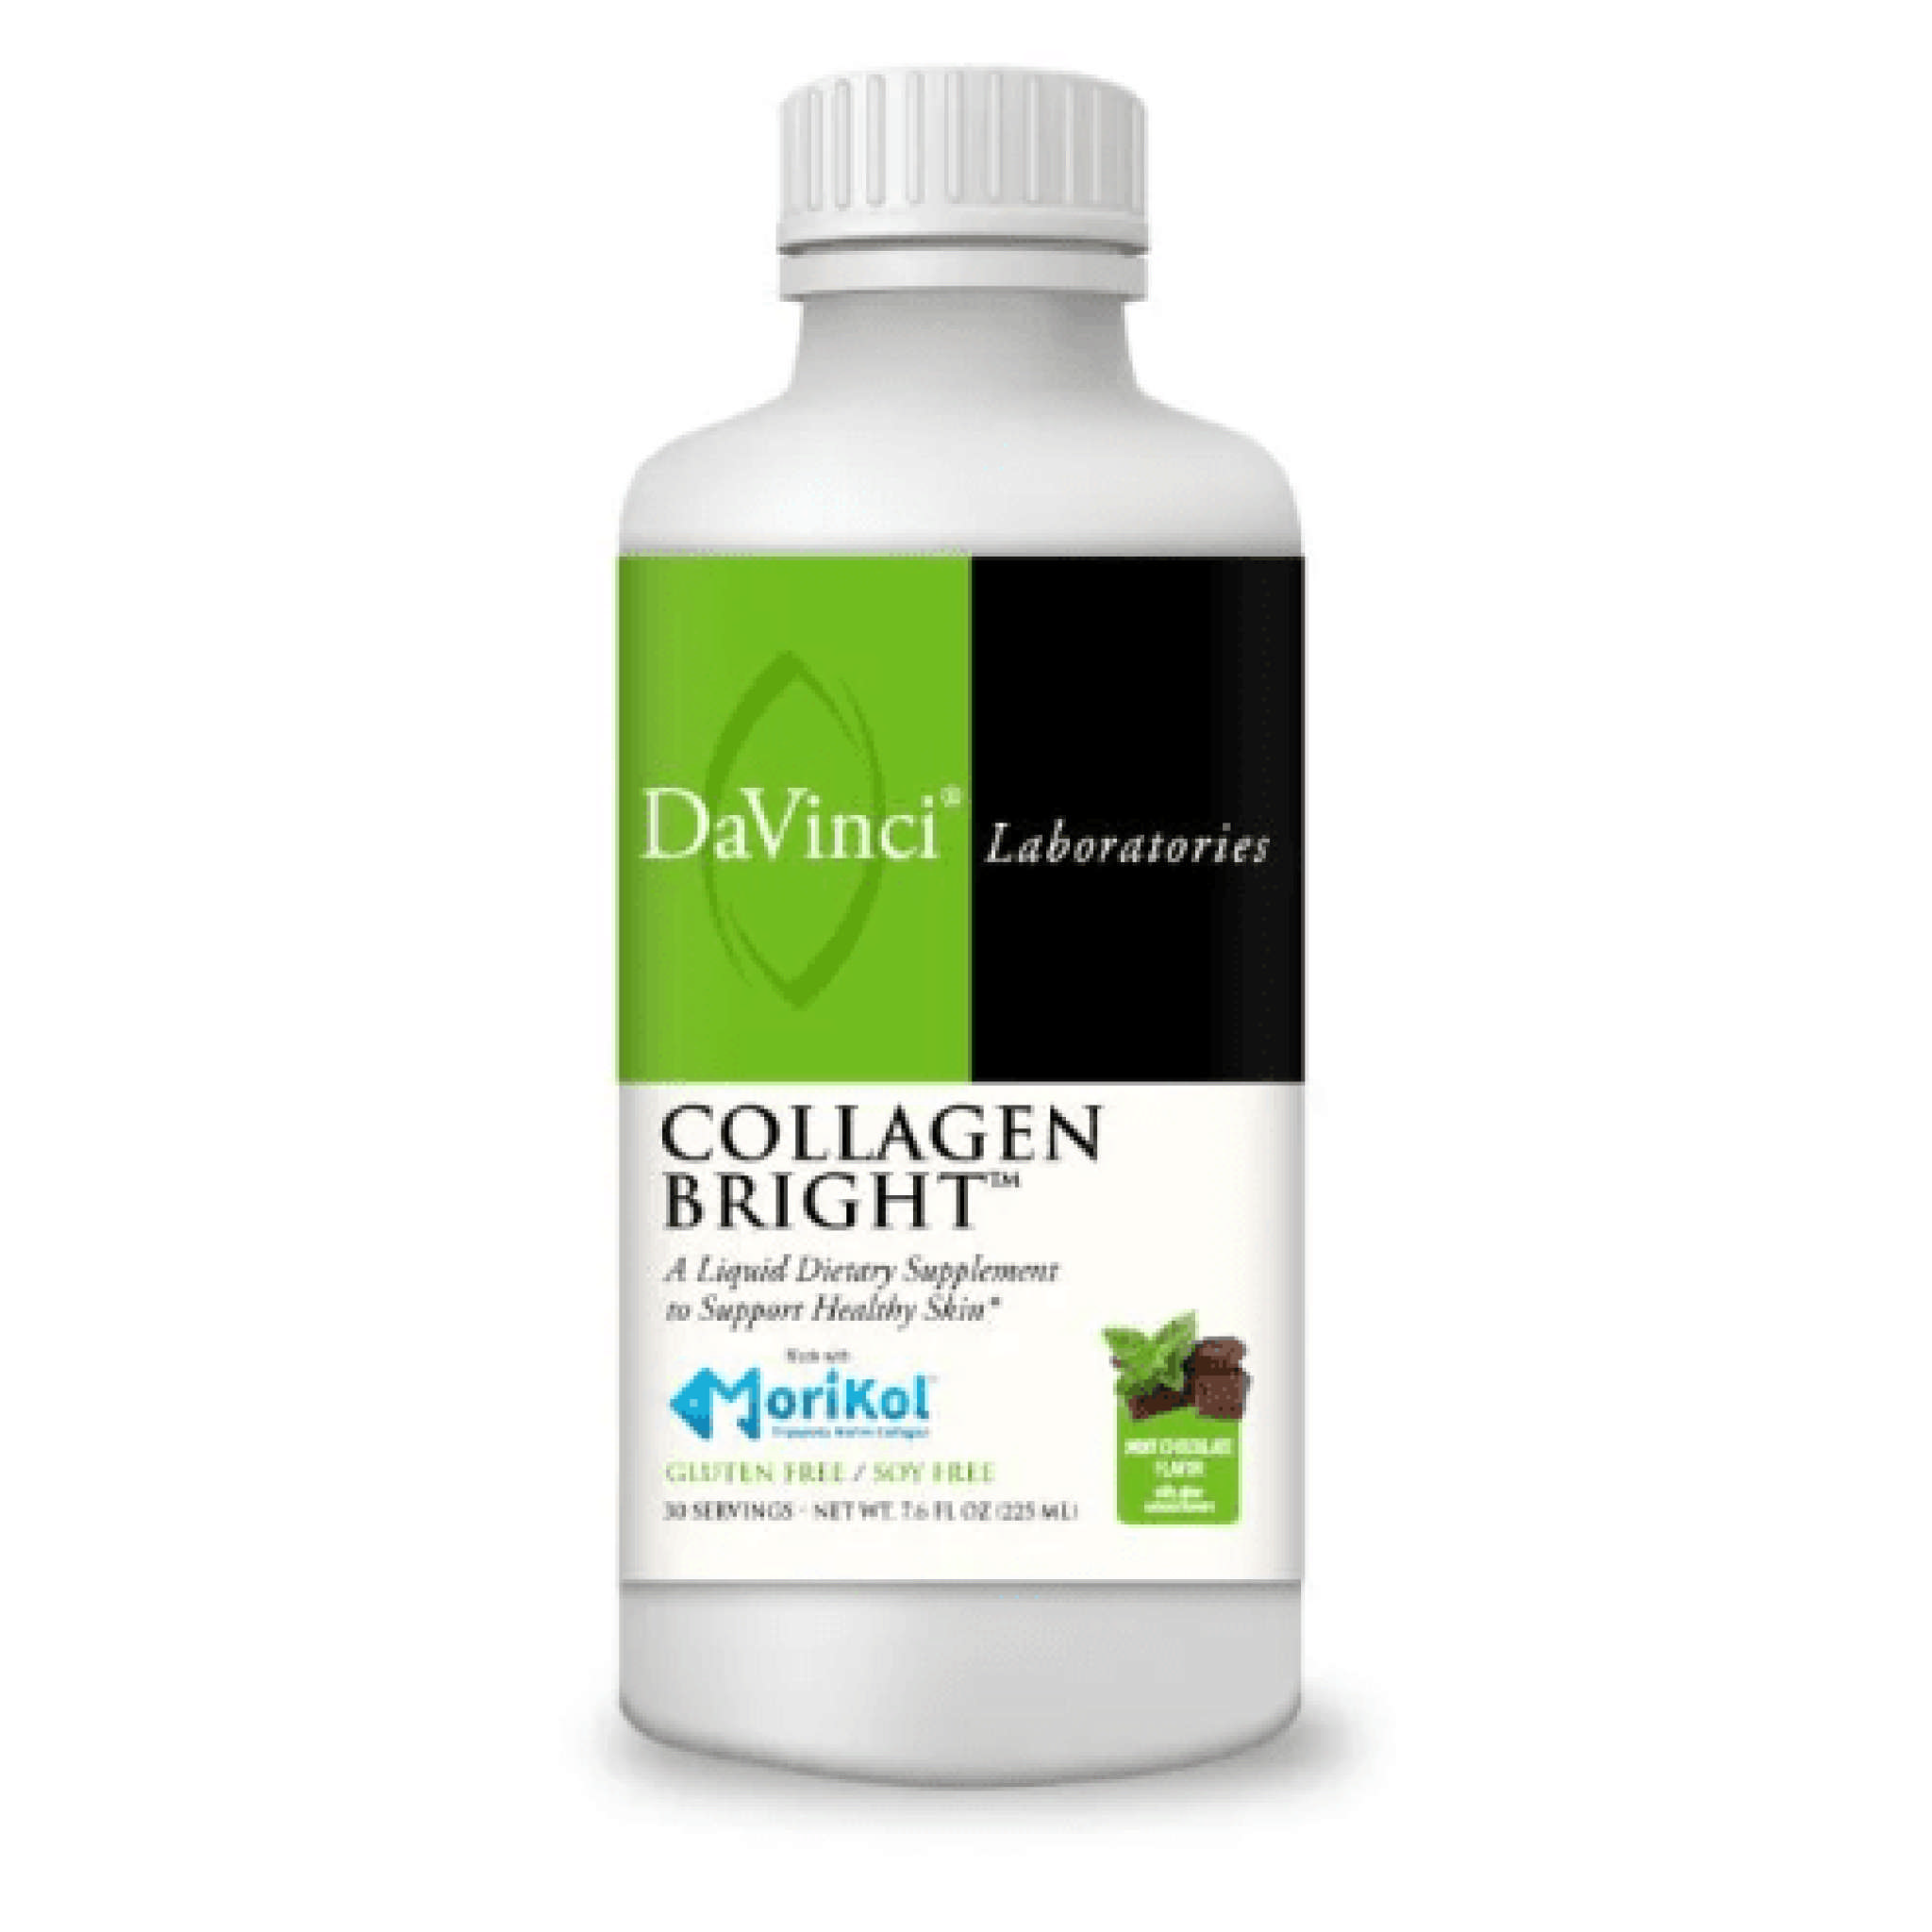 Davinci Laboratories - Collagen Bright liq Mint Choc